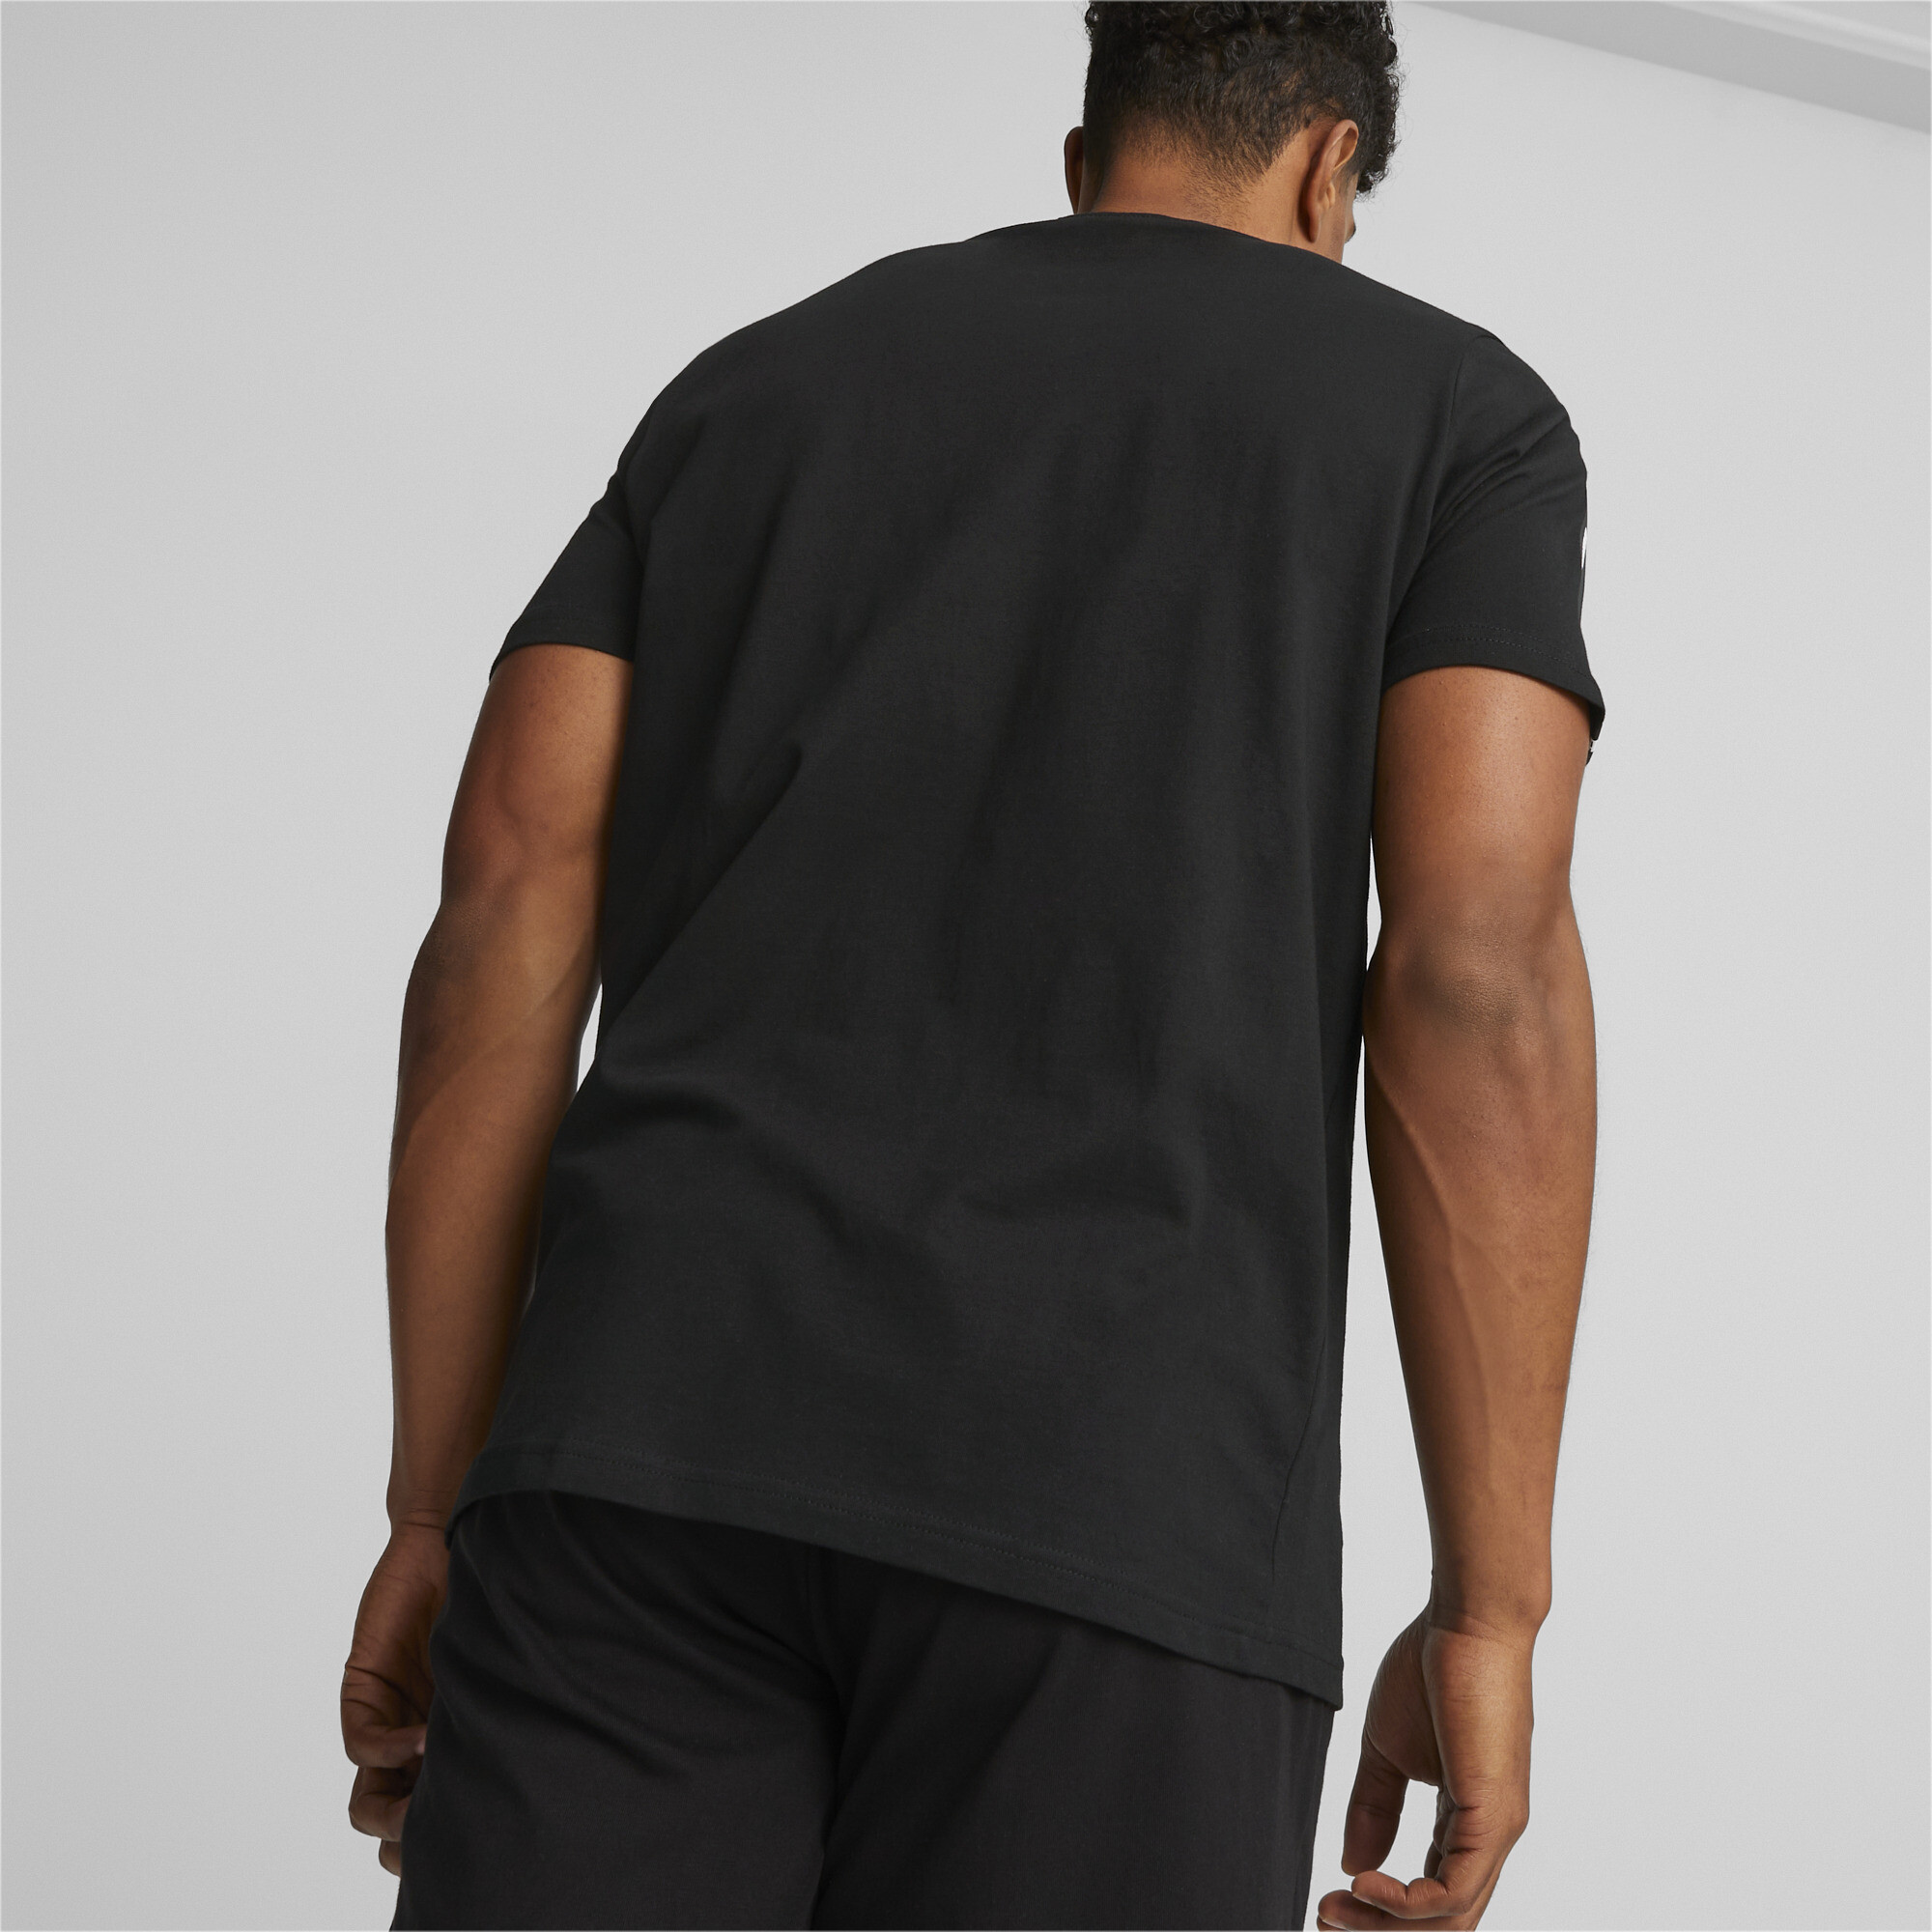 Men's Puma Essentials+ Tape's T-Shirt, Black, Size 3XL, Clothing